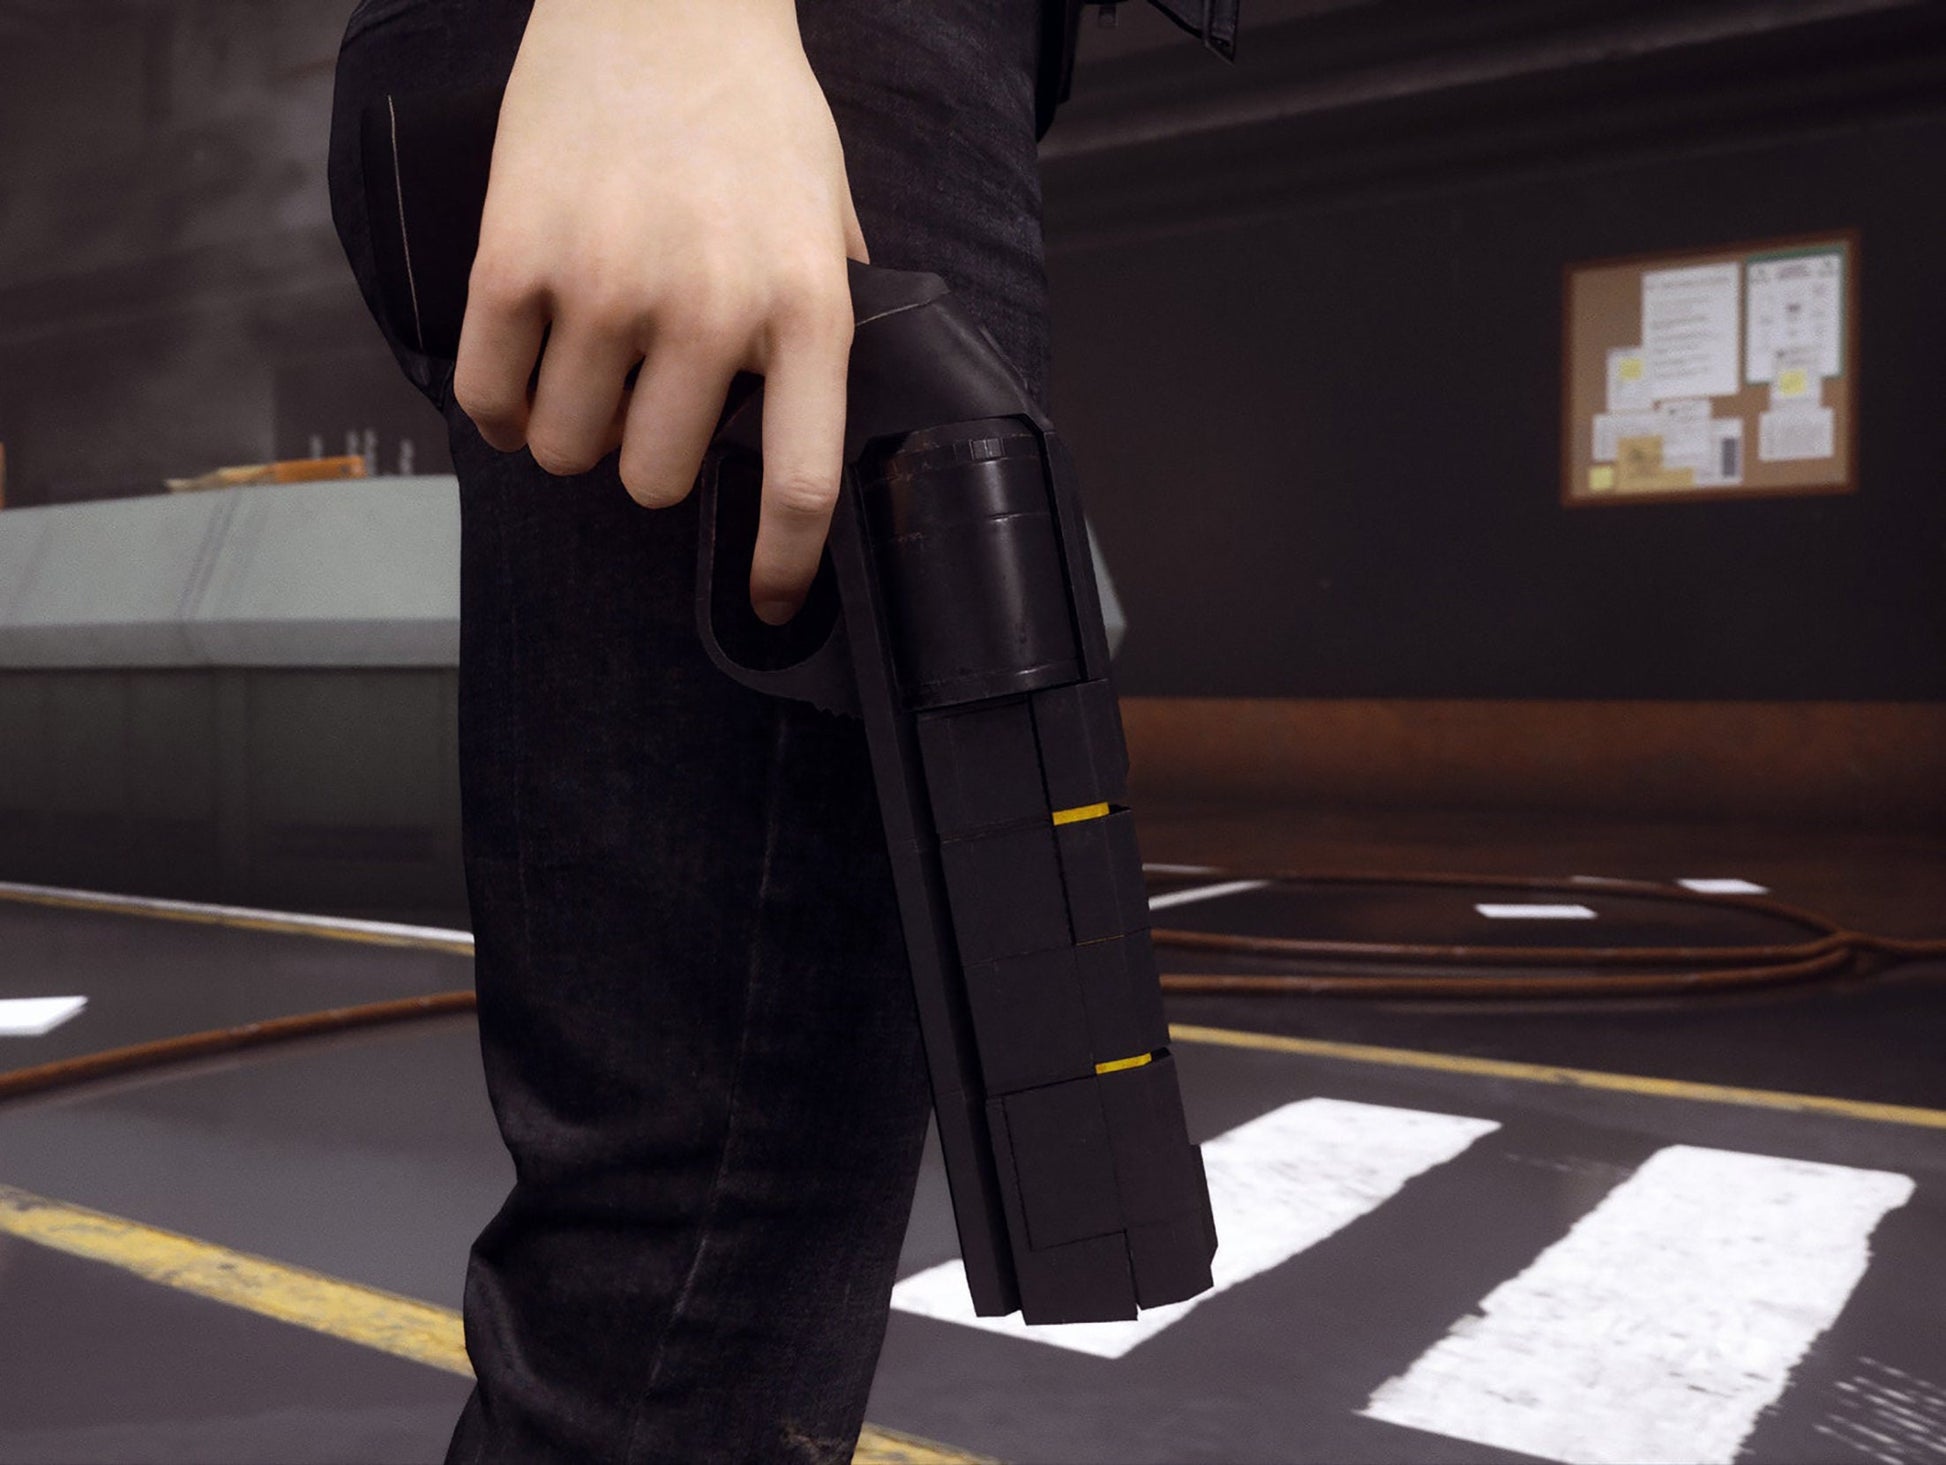 Control Hero Gun Service Pistol Cosplay Prop Replica OPEN & CLOSED versions! - by buissonland